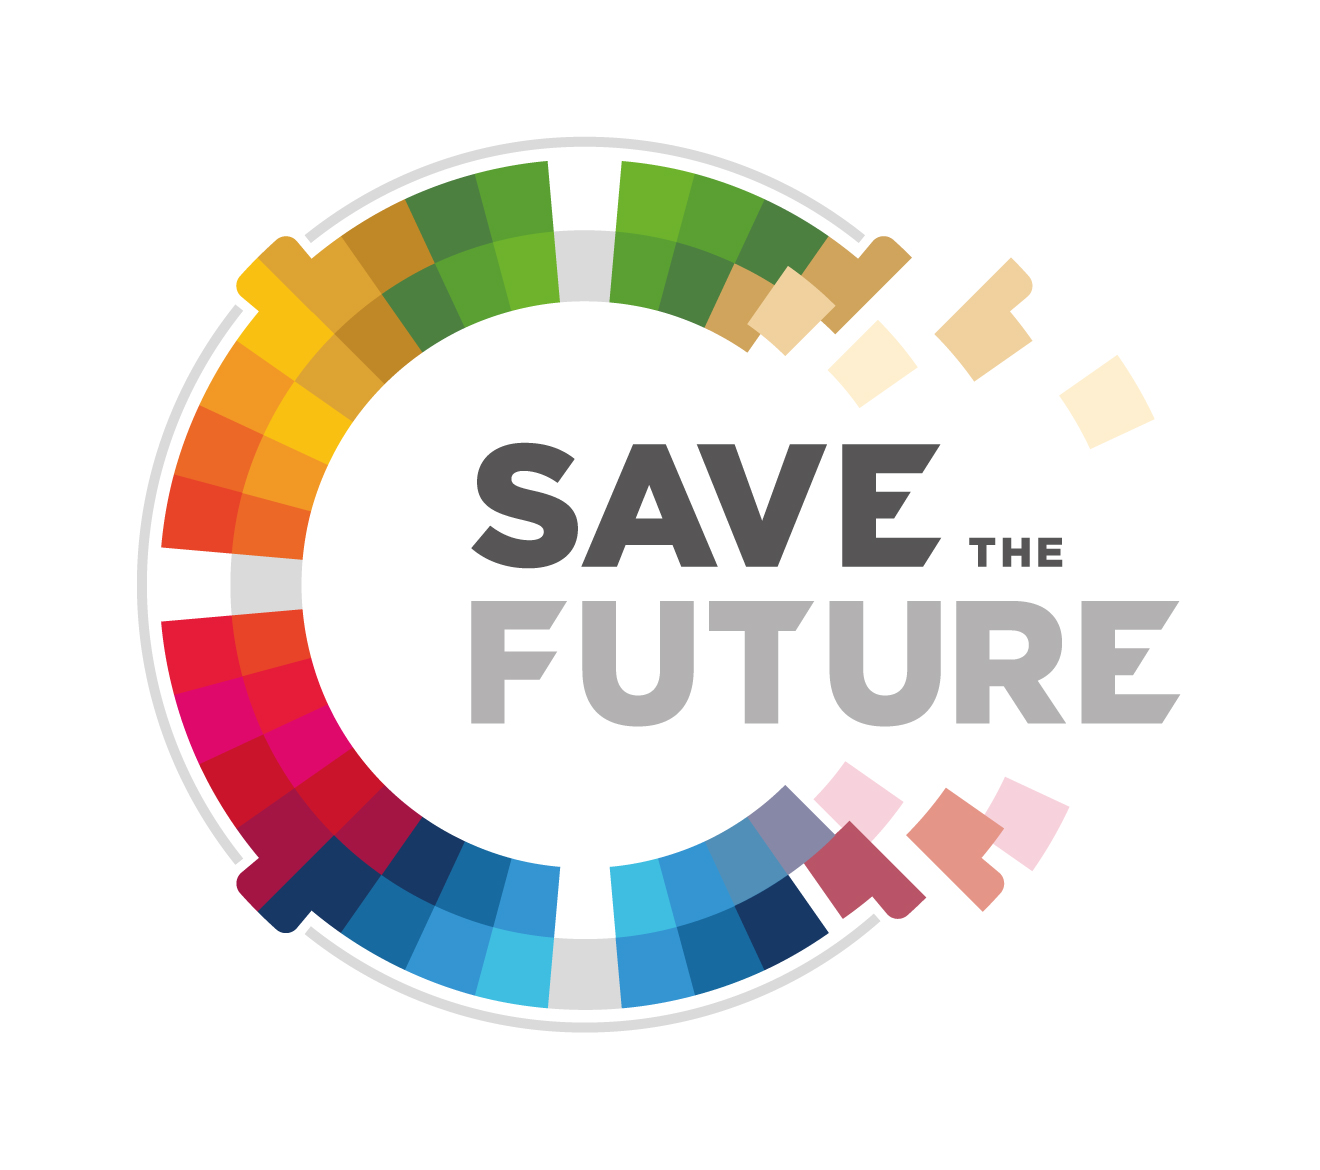 Save the Future